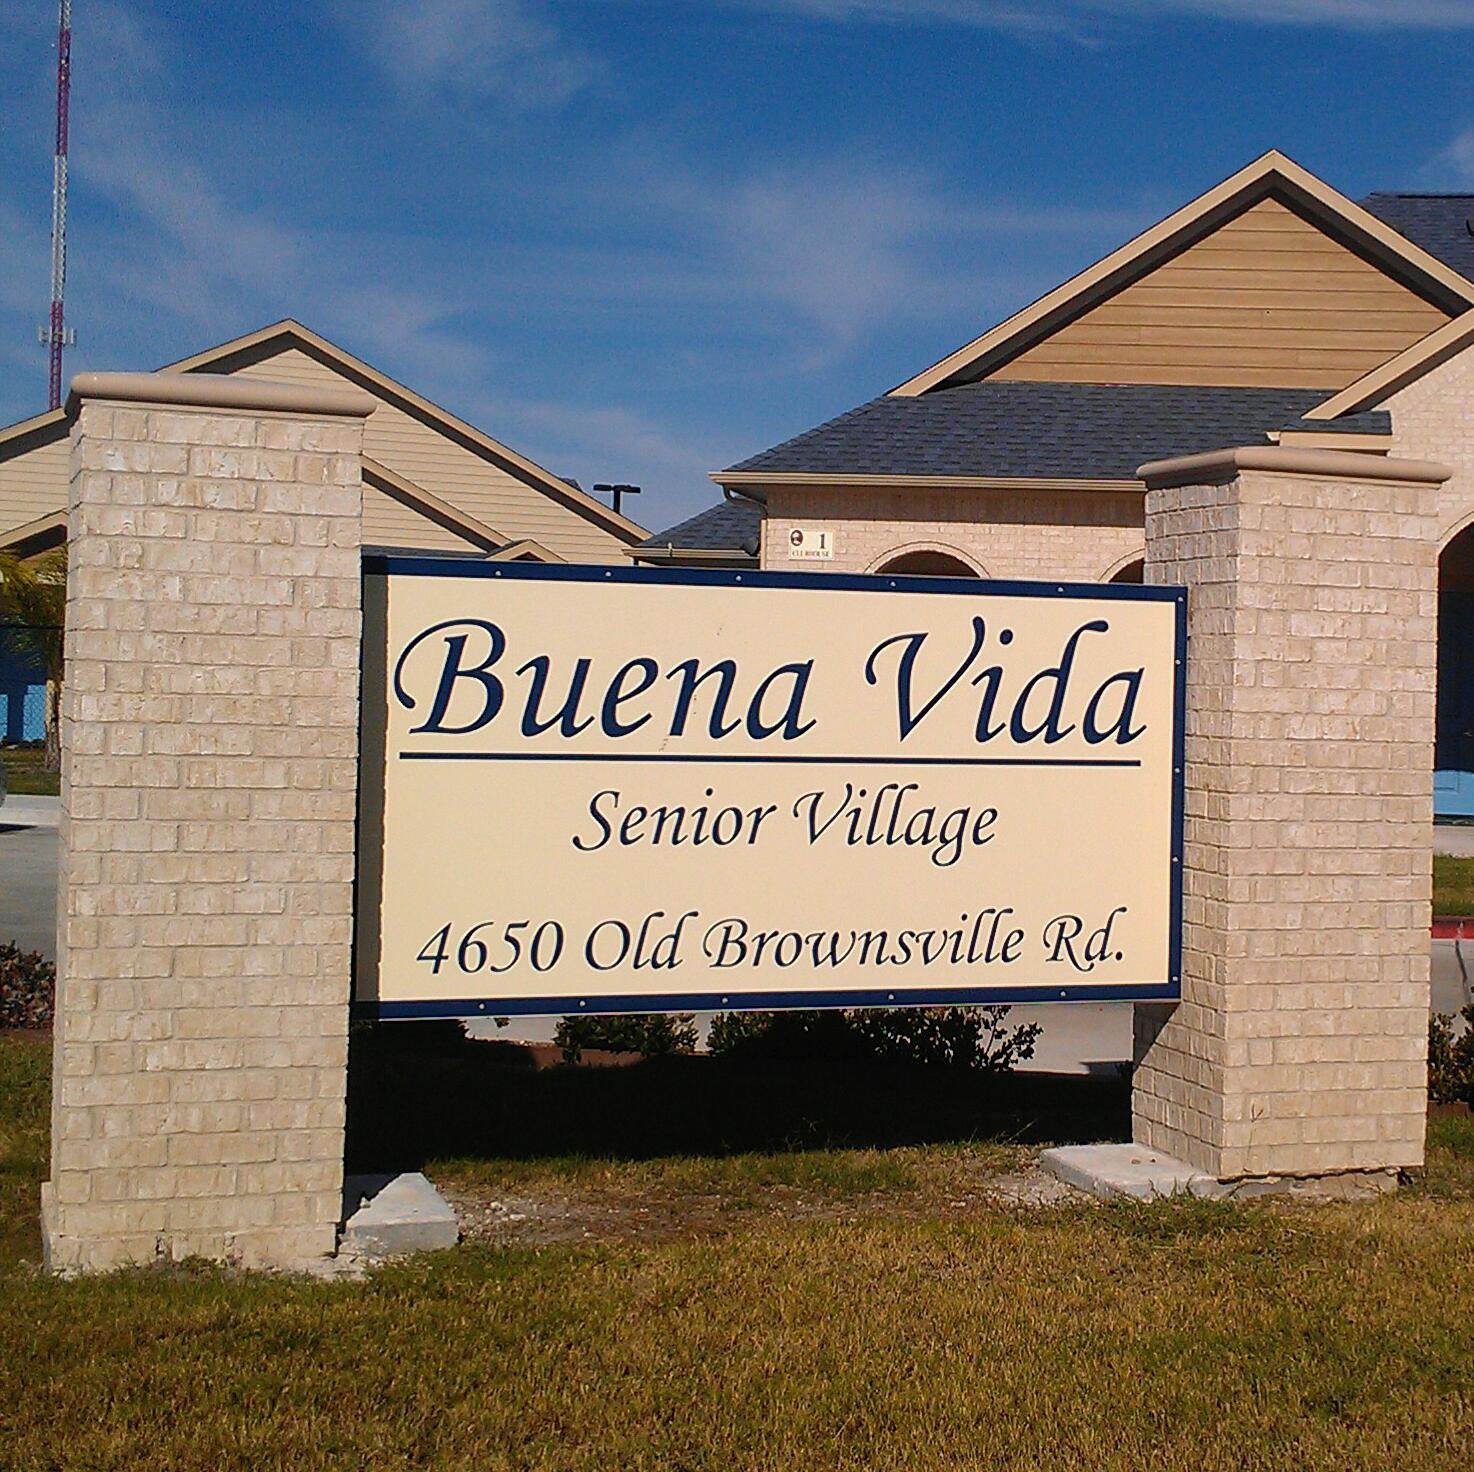 Buena Vida Senior Village